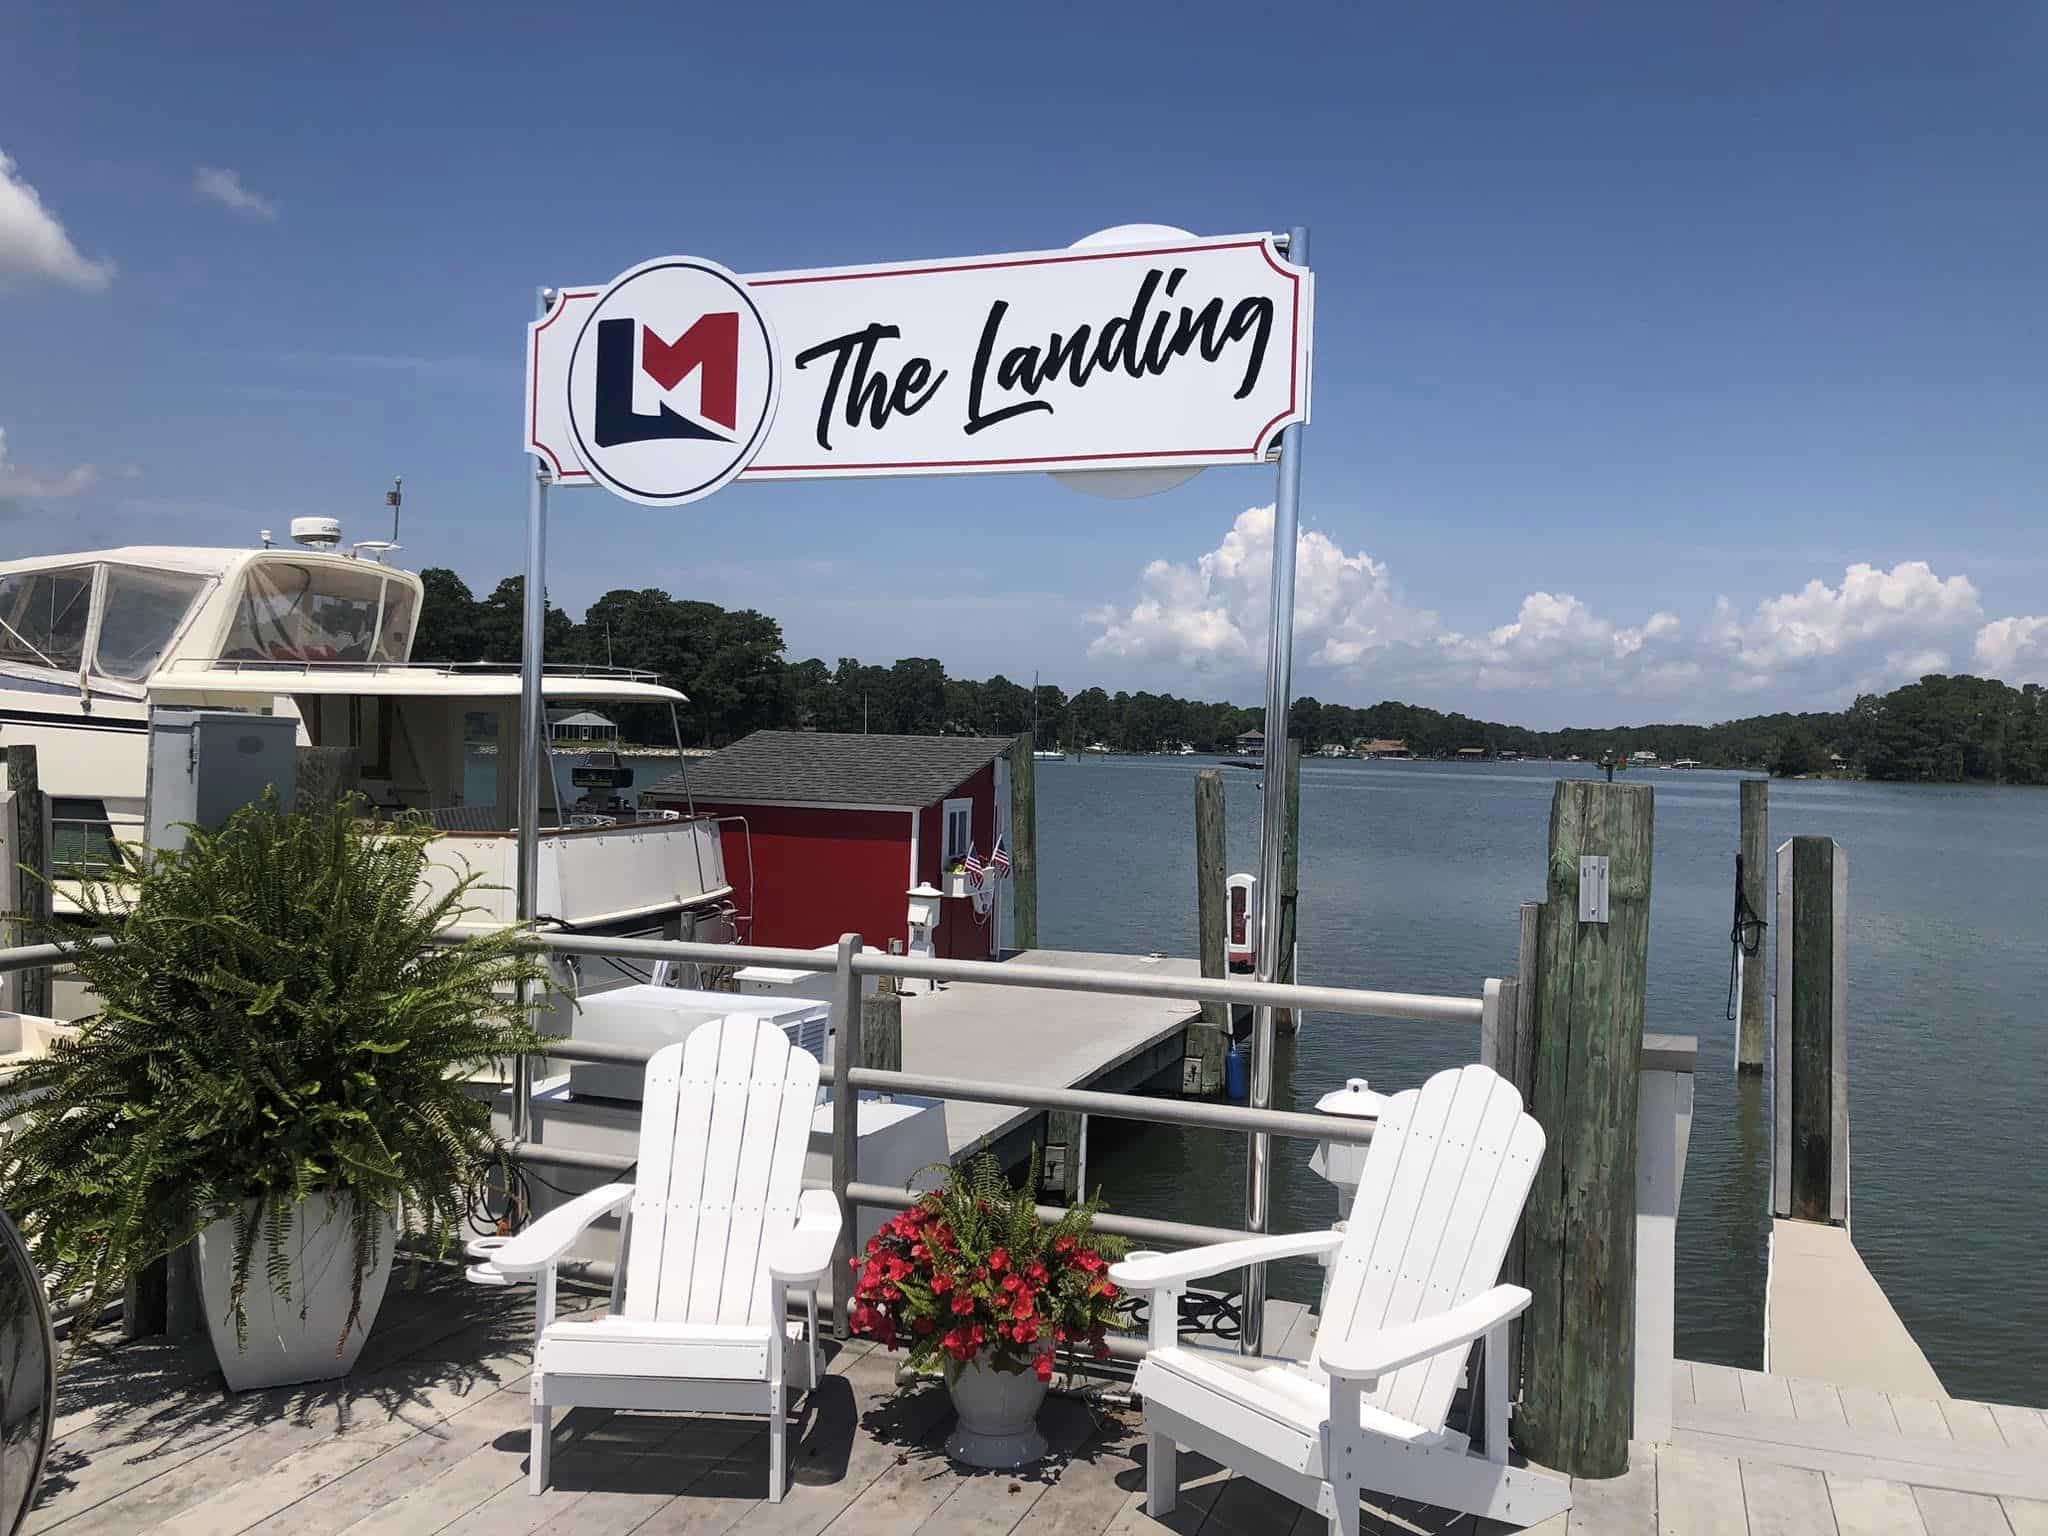 The Landing at Legasea Marine signage